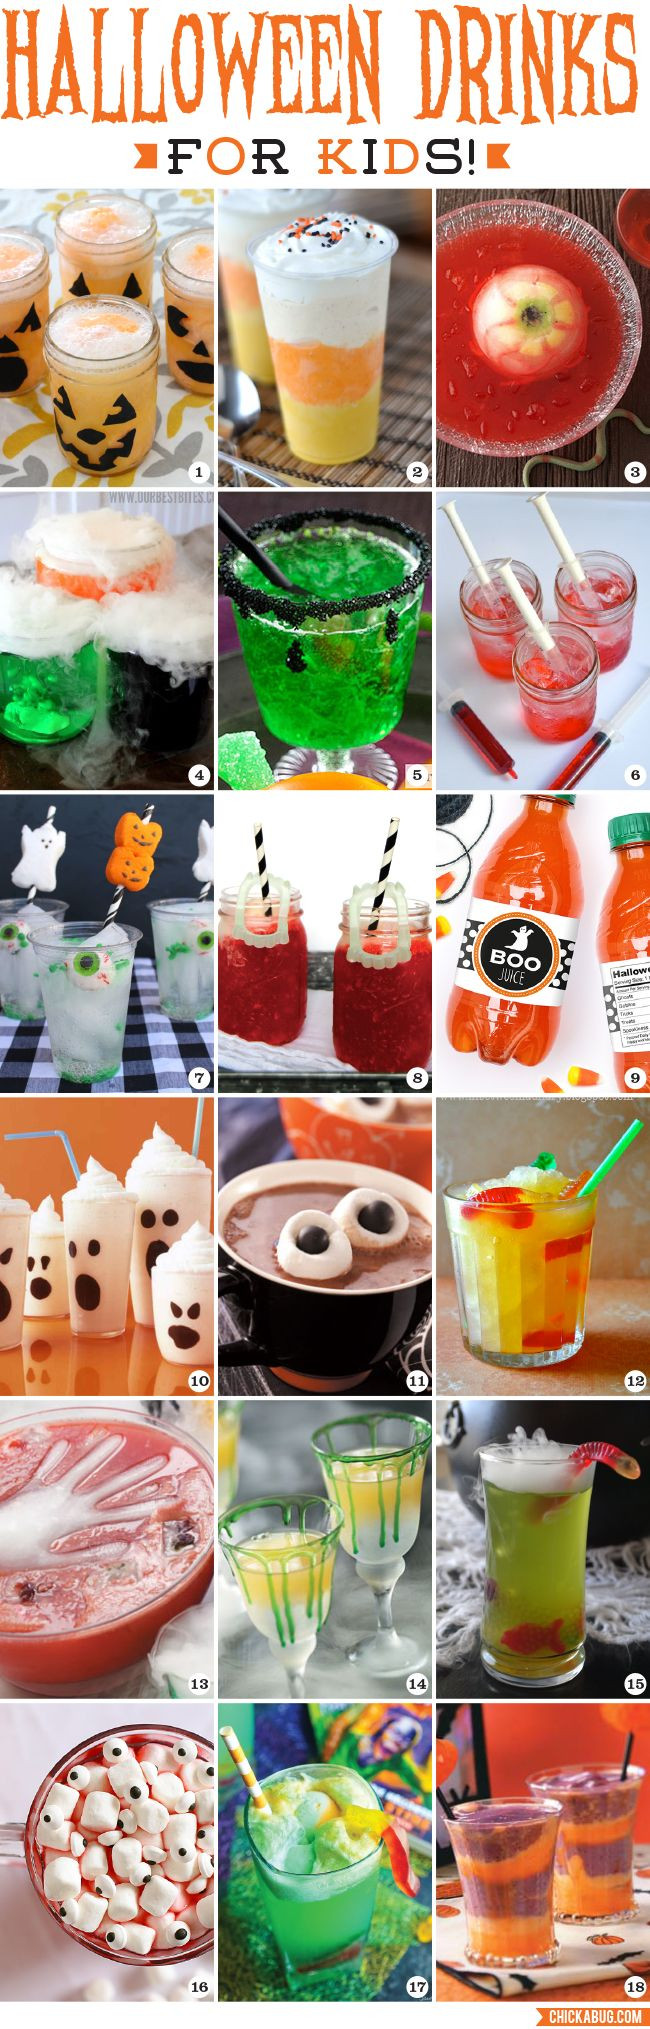 Halloween Food And Drinks
 Best 25 Kids halloween parties ideas on Pinterest